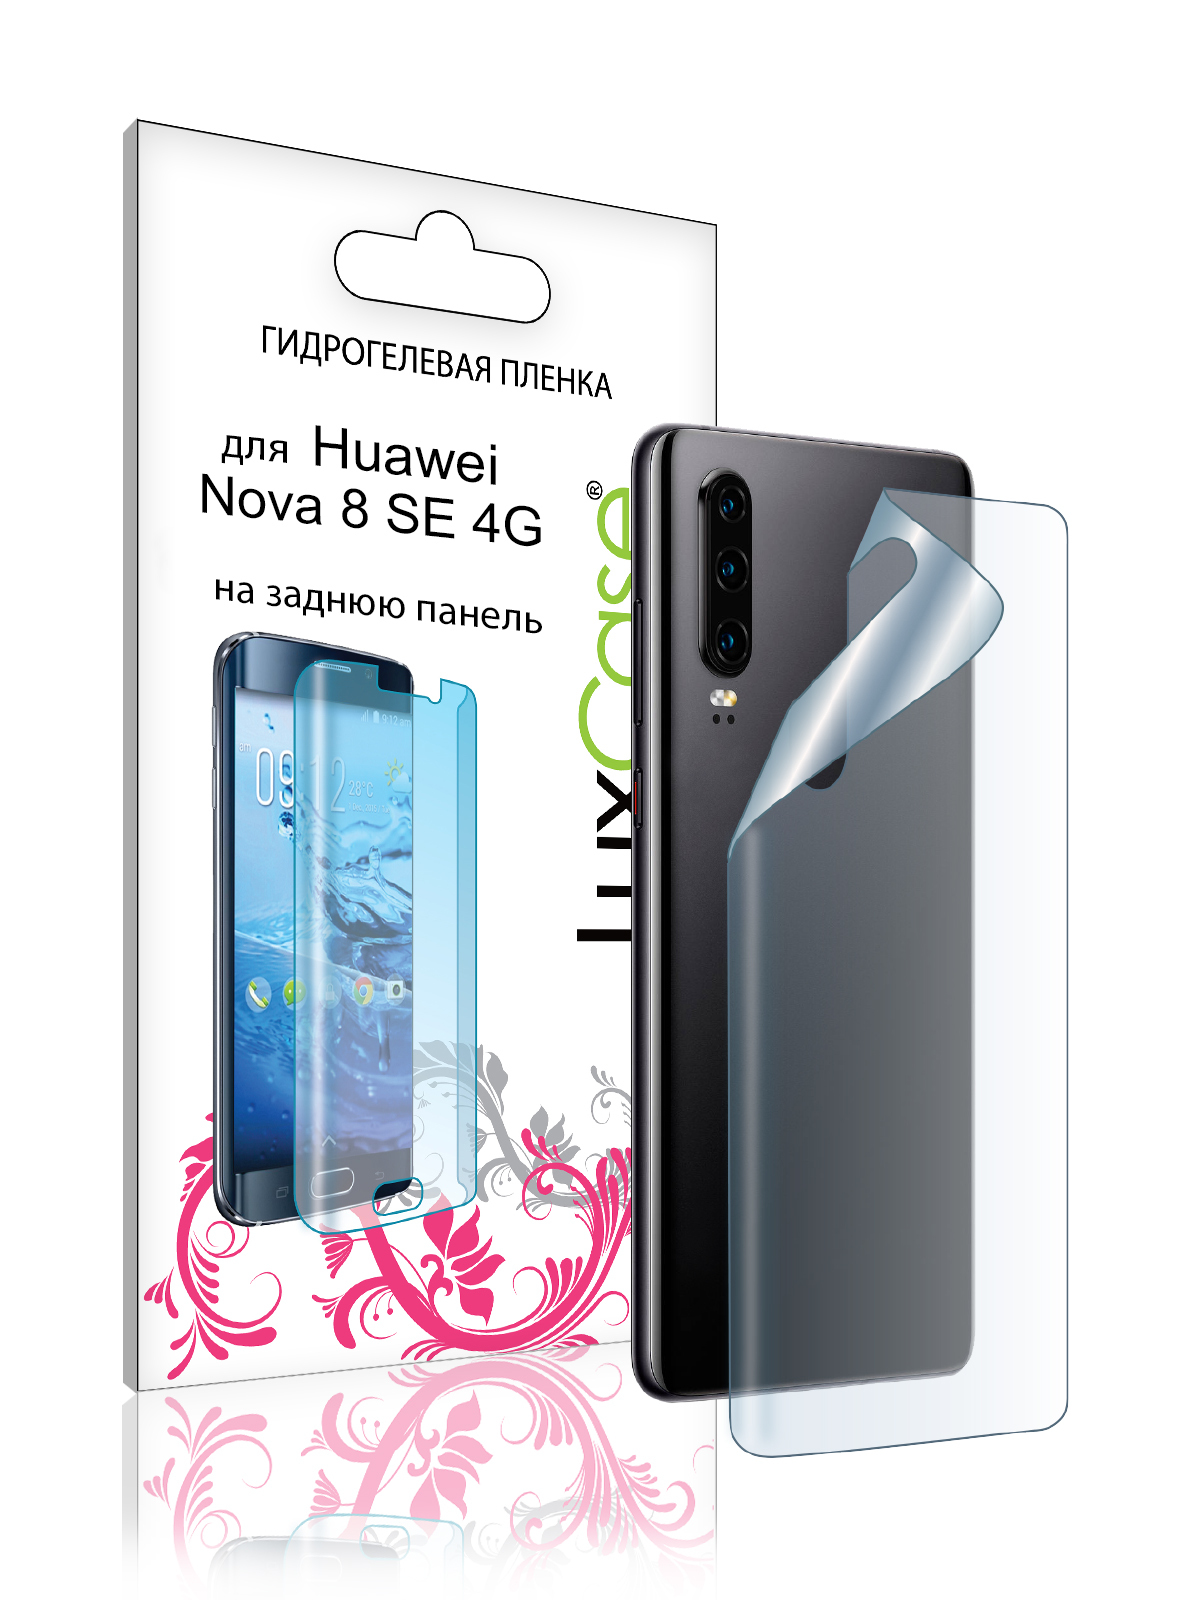 Гидрогелевая пленка LuxCase для Huawei Nova 8 SE 4G 0.14mm Back Transparent 90042 гидрогелевая пленка luxcase для huawei nova 8 se 4g 0 14mm front and back transparent 90043